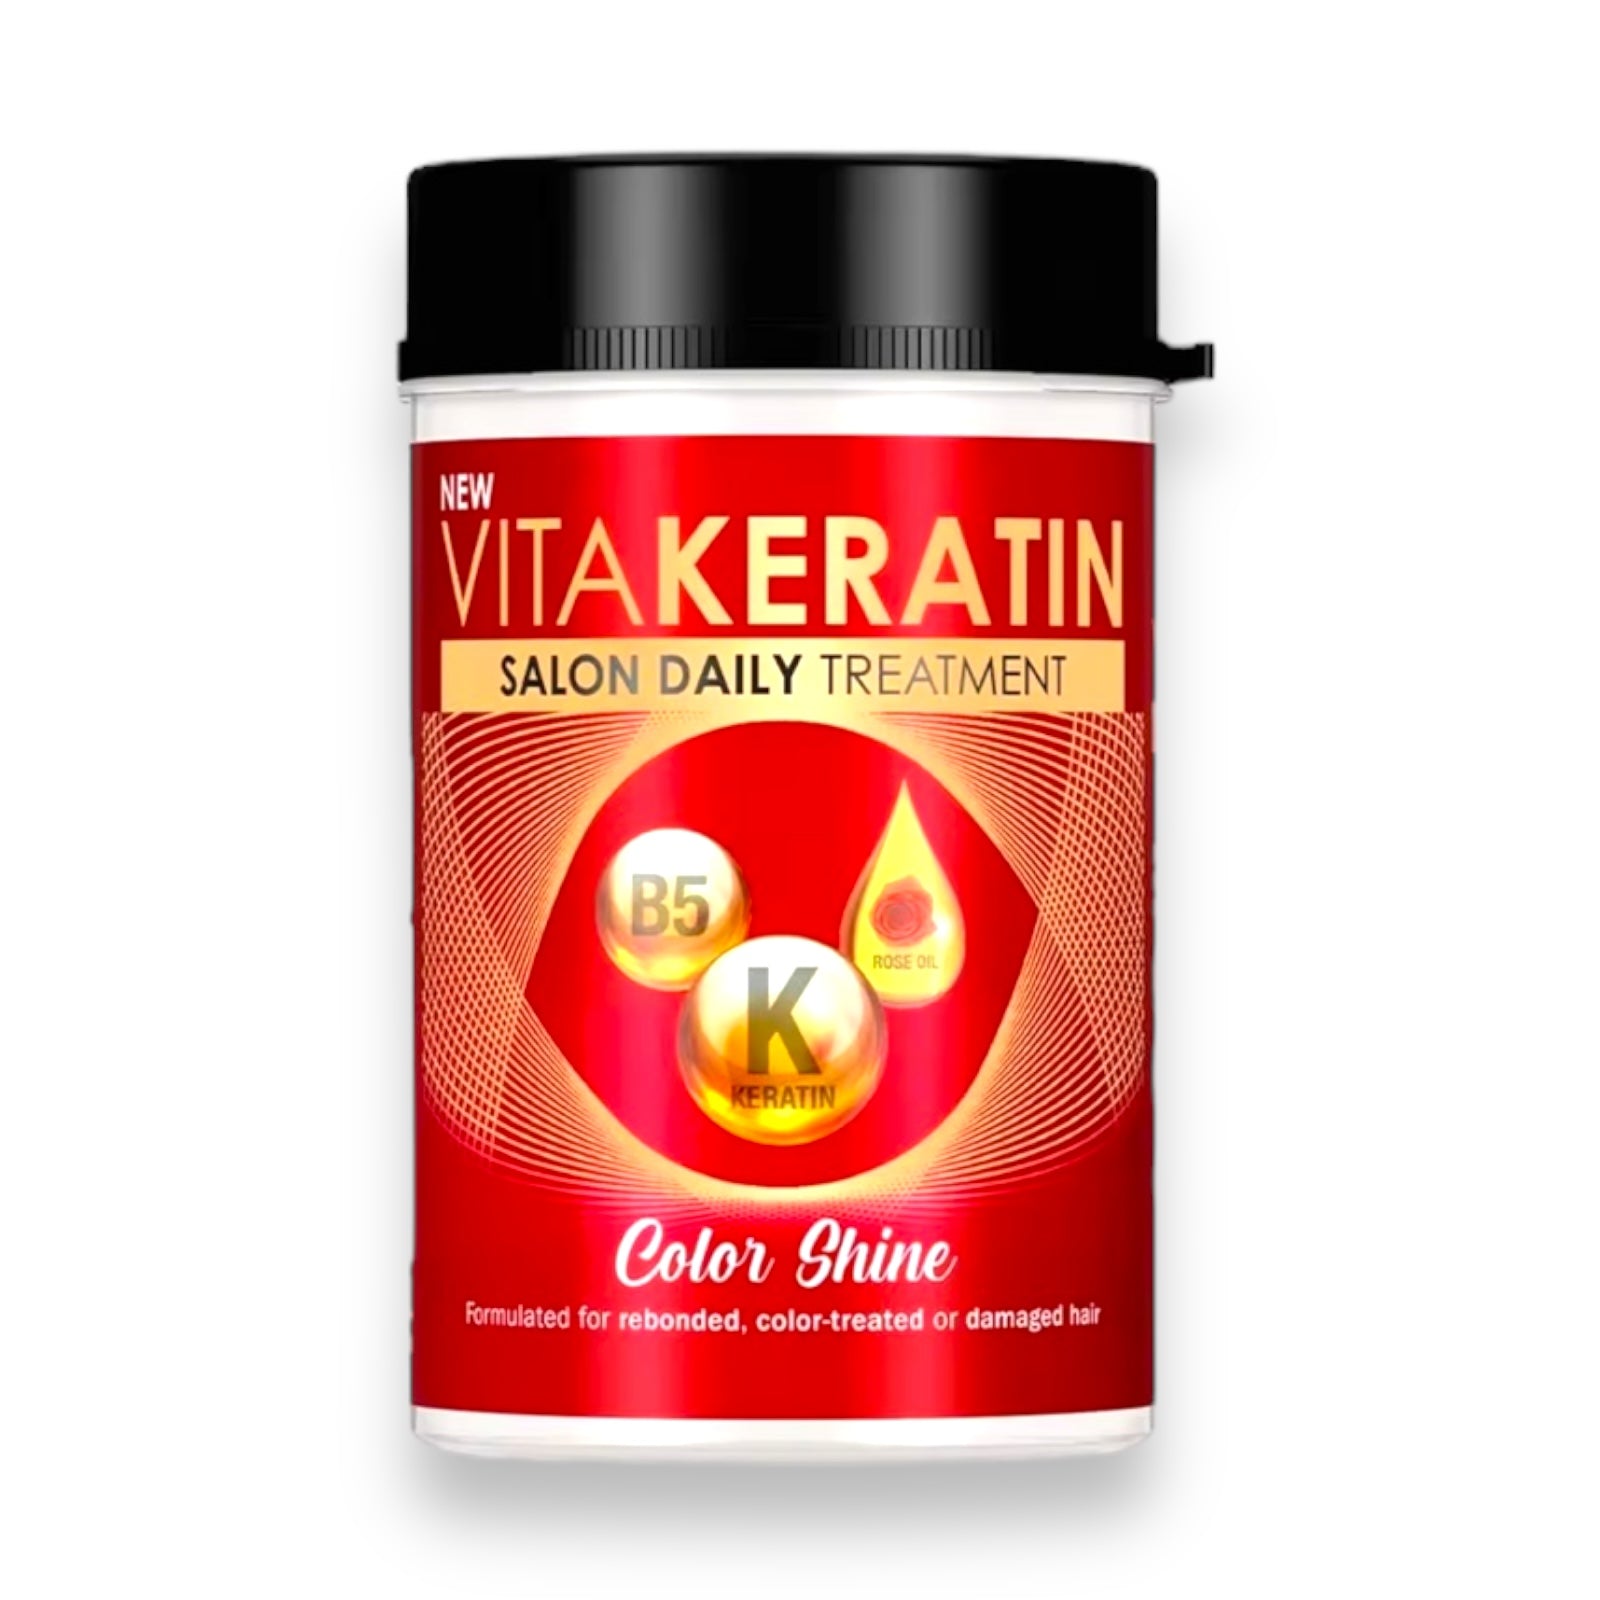 Vita Keratin - Salon Daily Treatment “COLOR SHINE” 600 ml - ( Red )